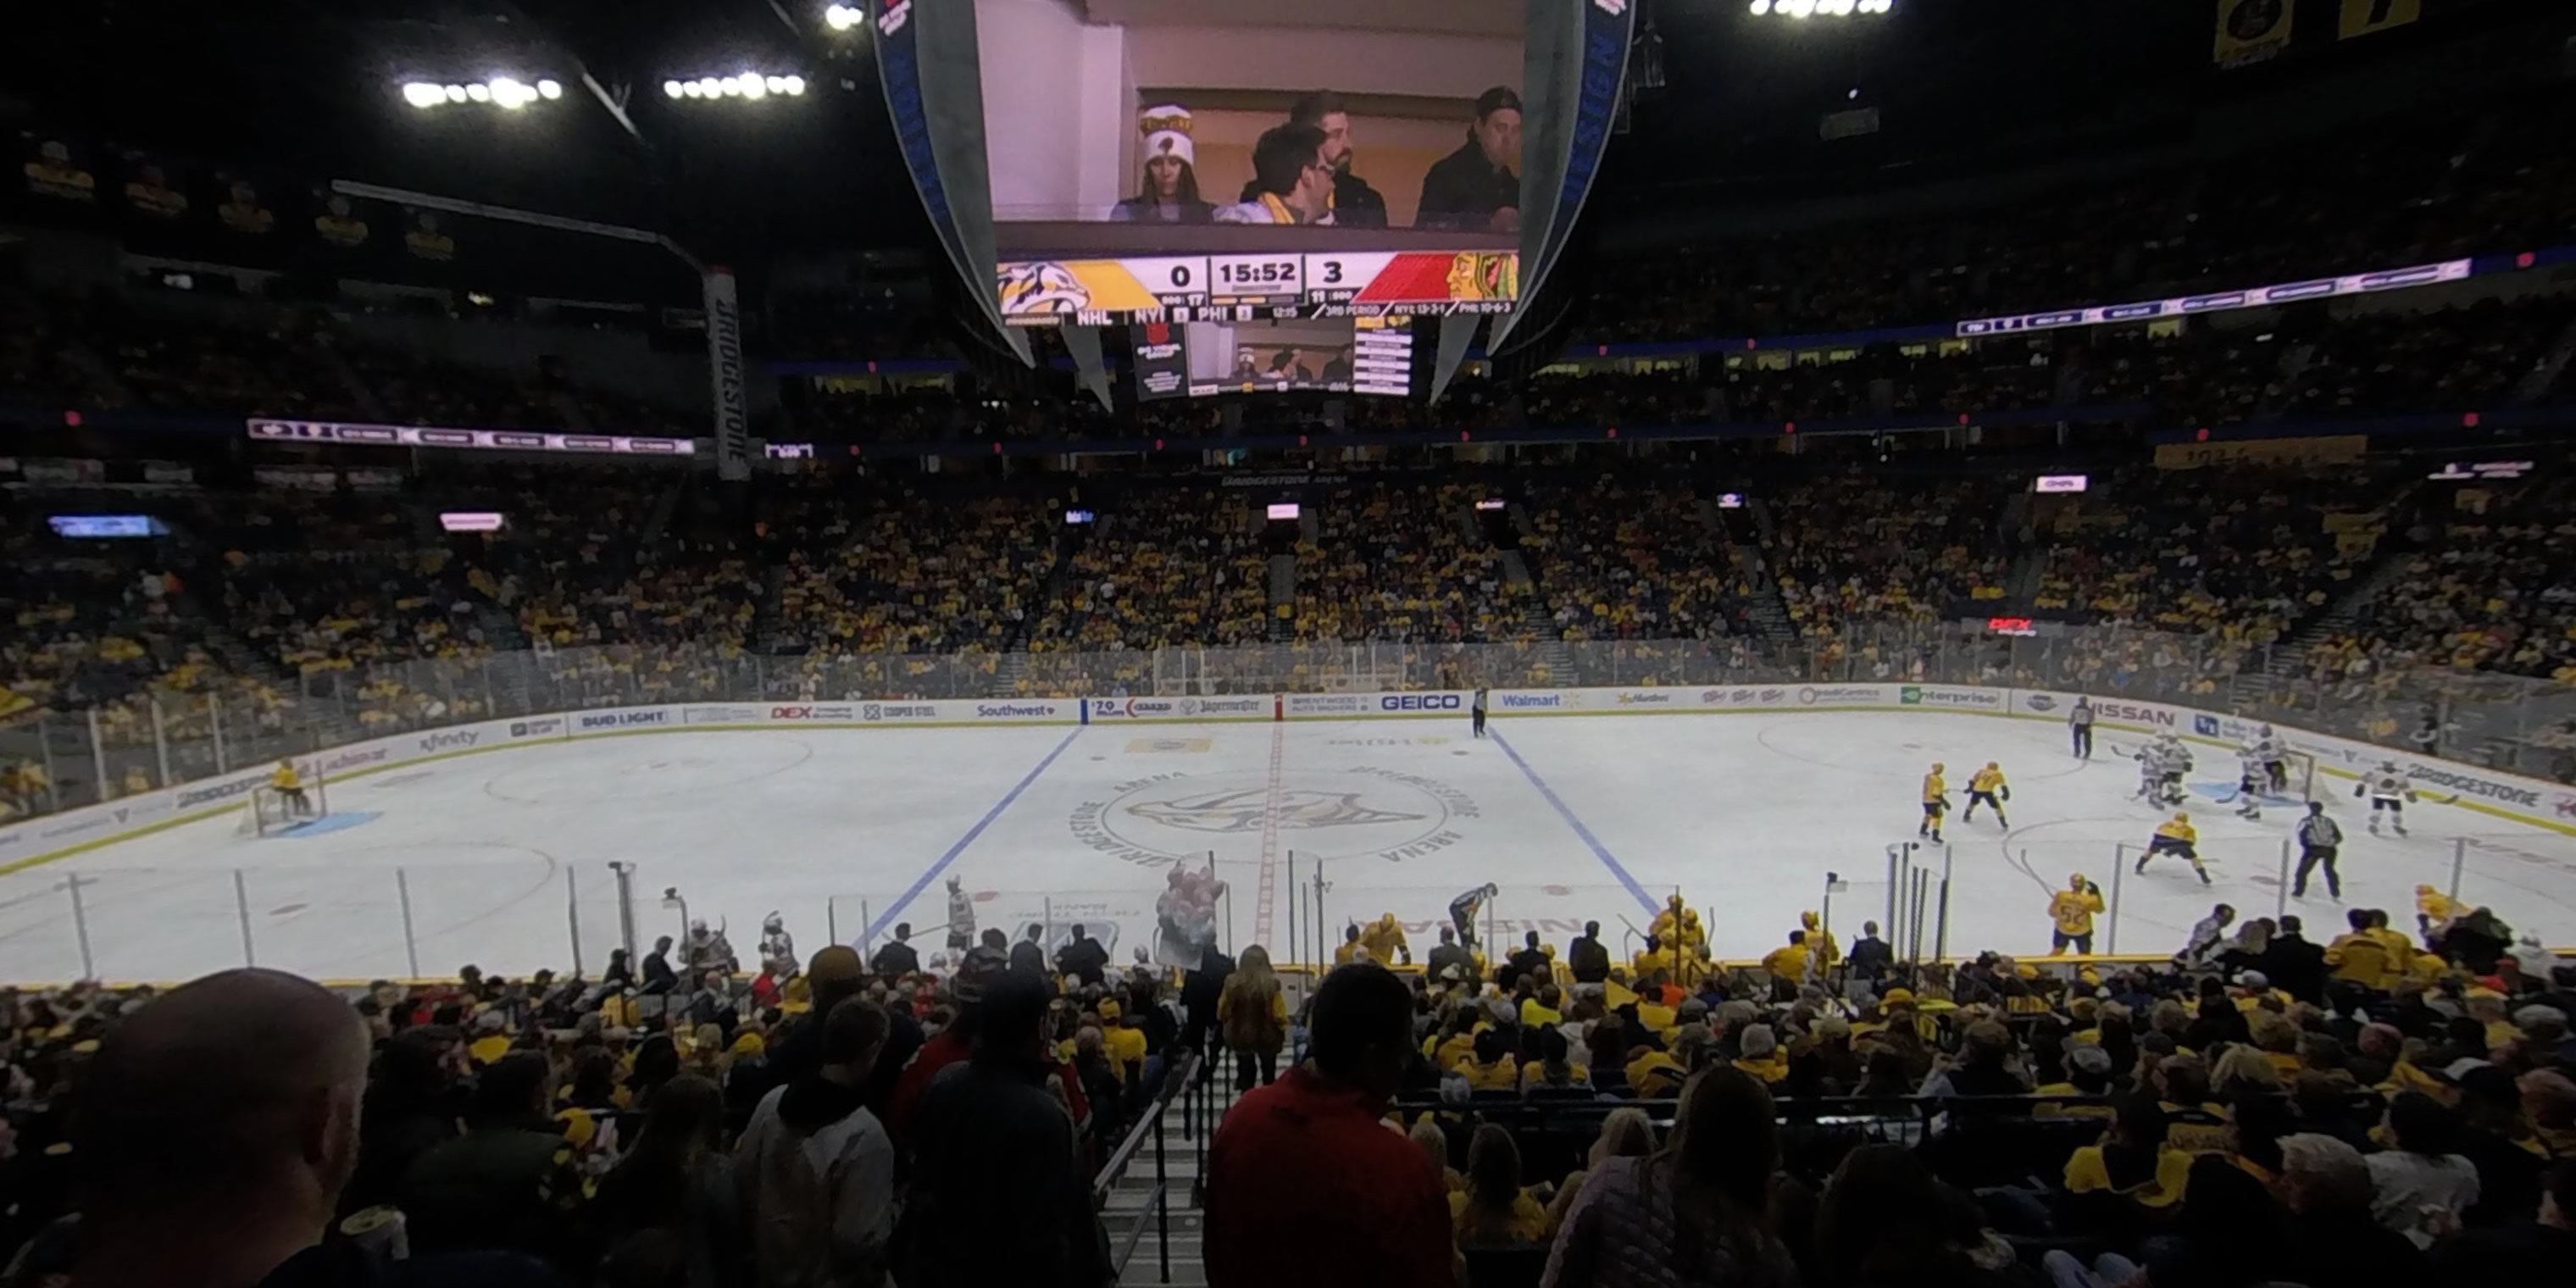 section 115 panoramic seat view  for hockey - bridgestone arena